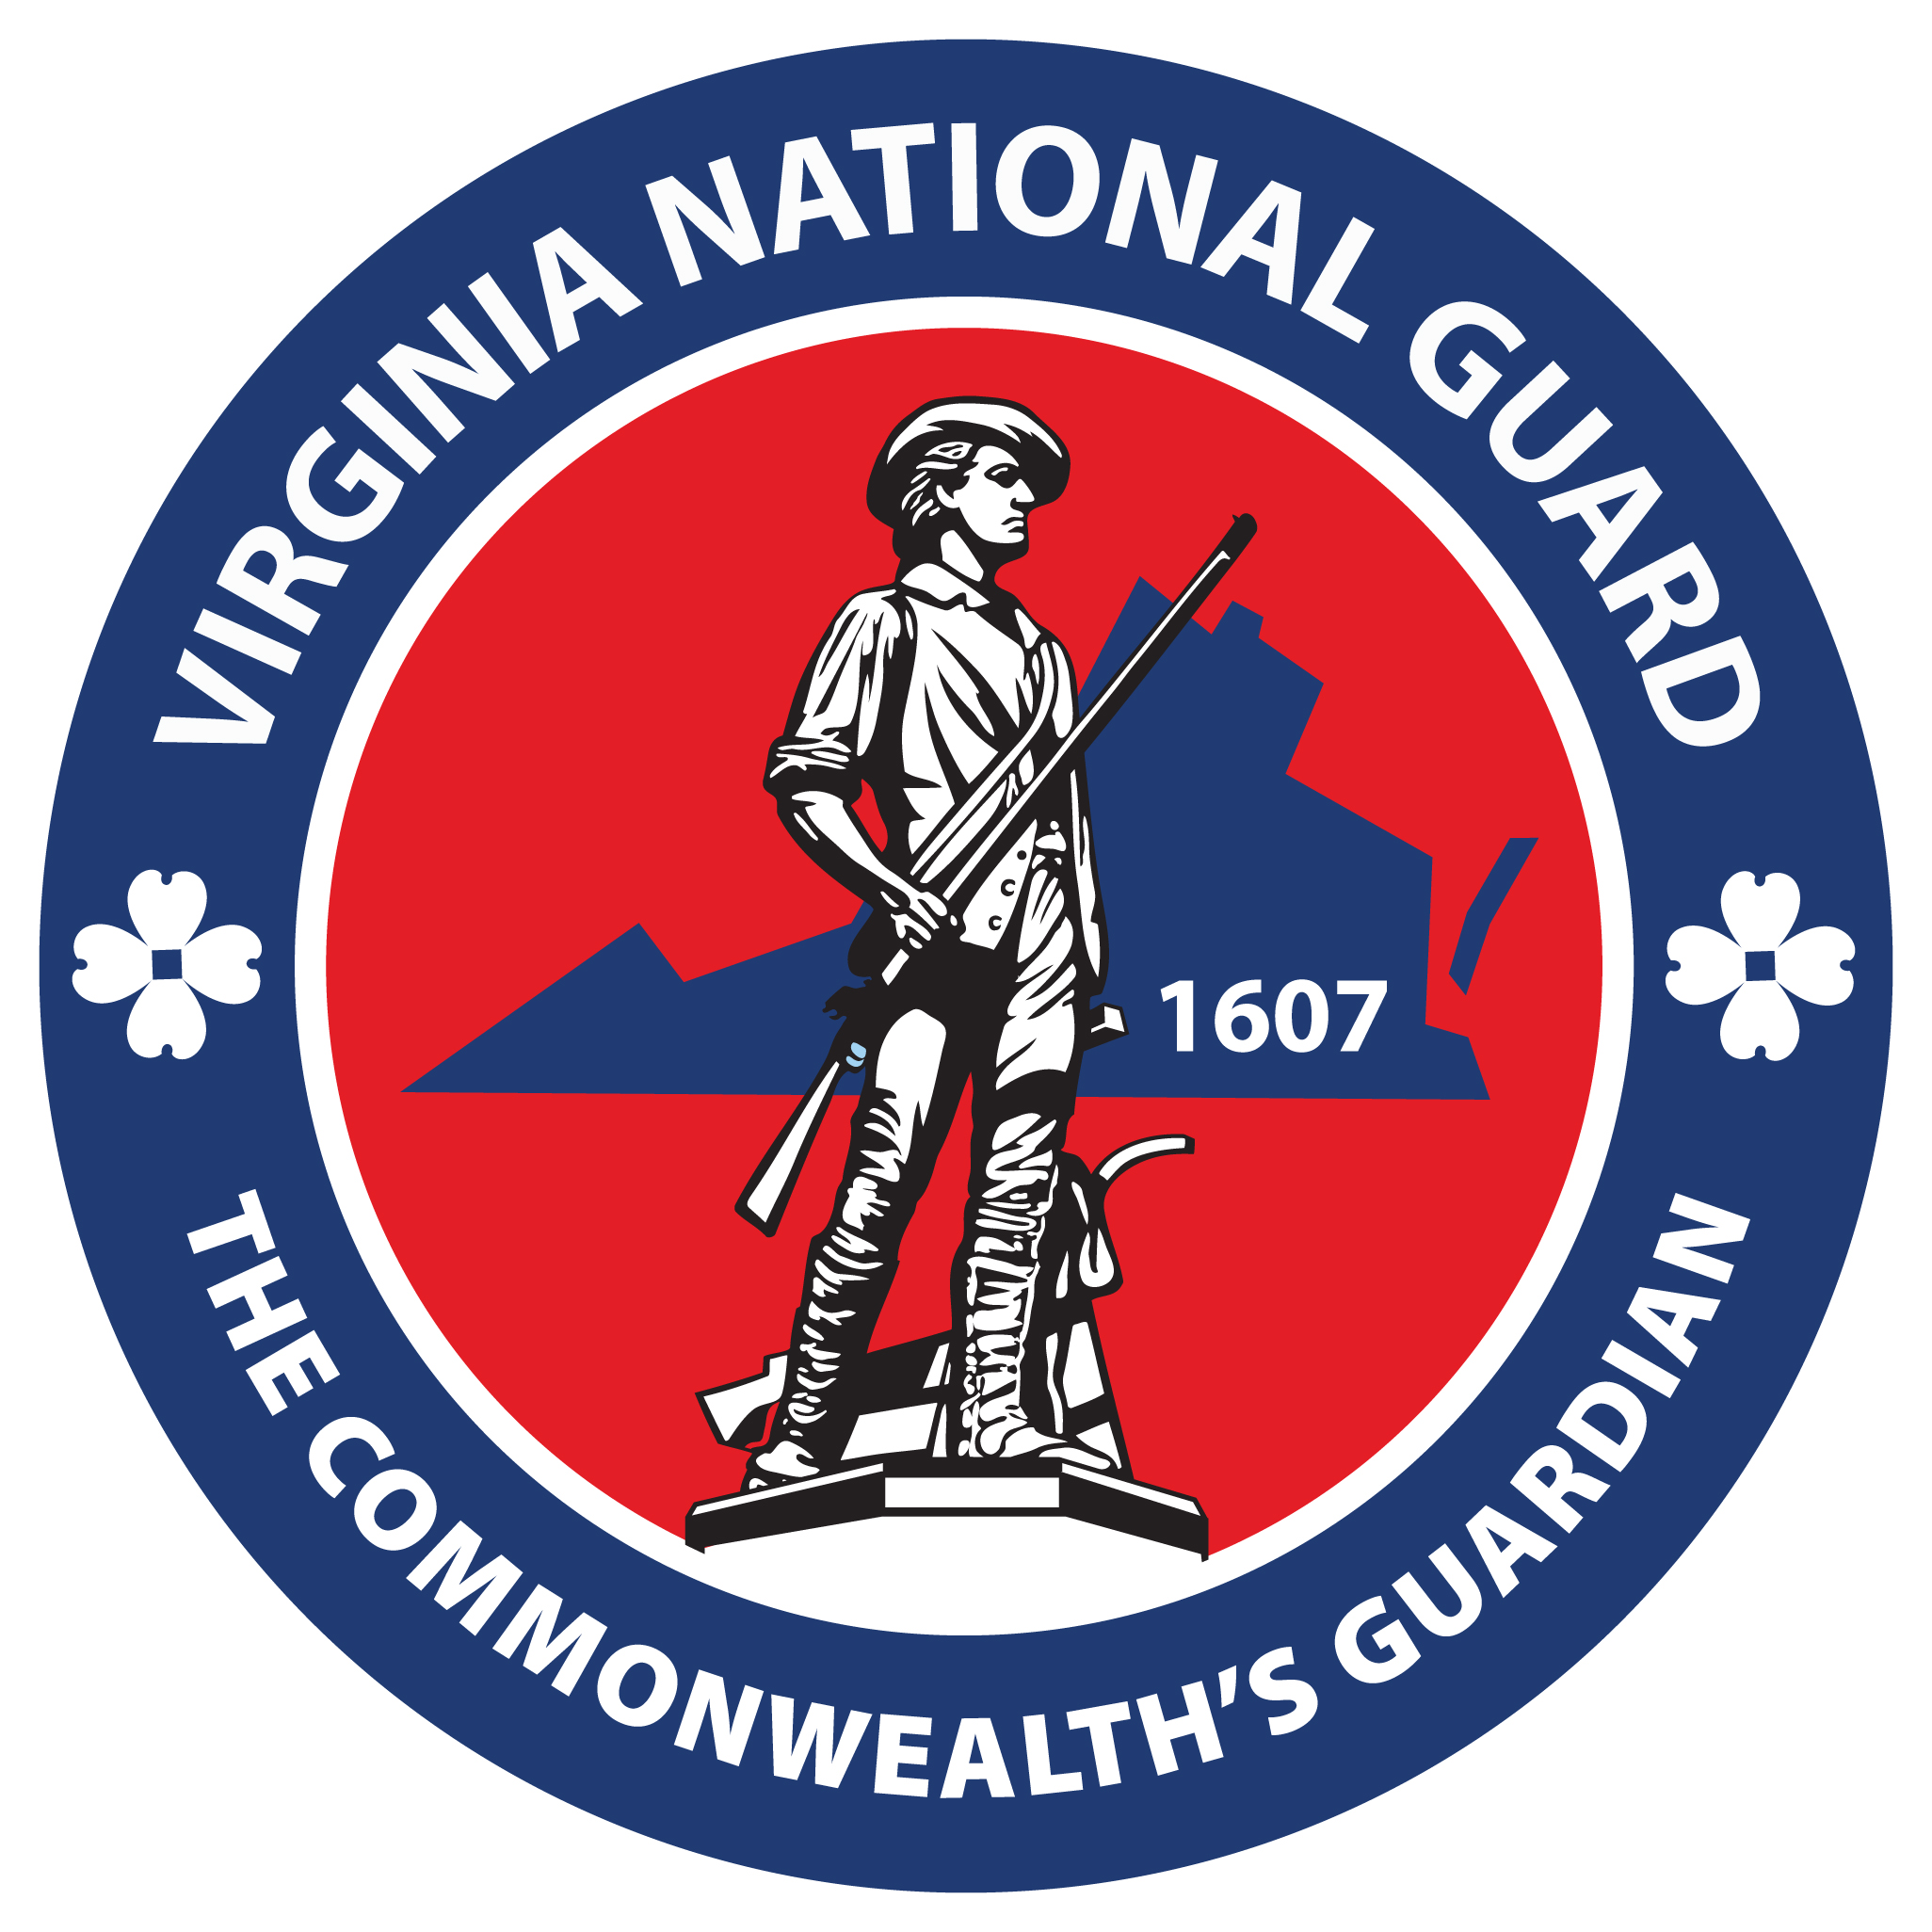 Virginia National Guard Logos and Graphics.